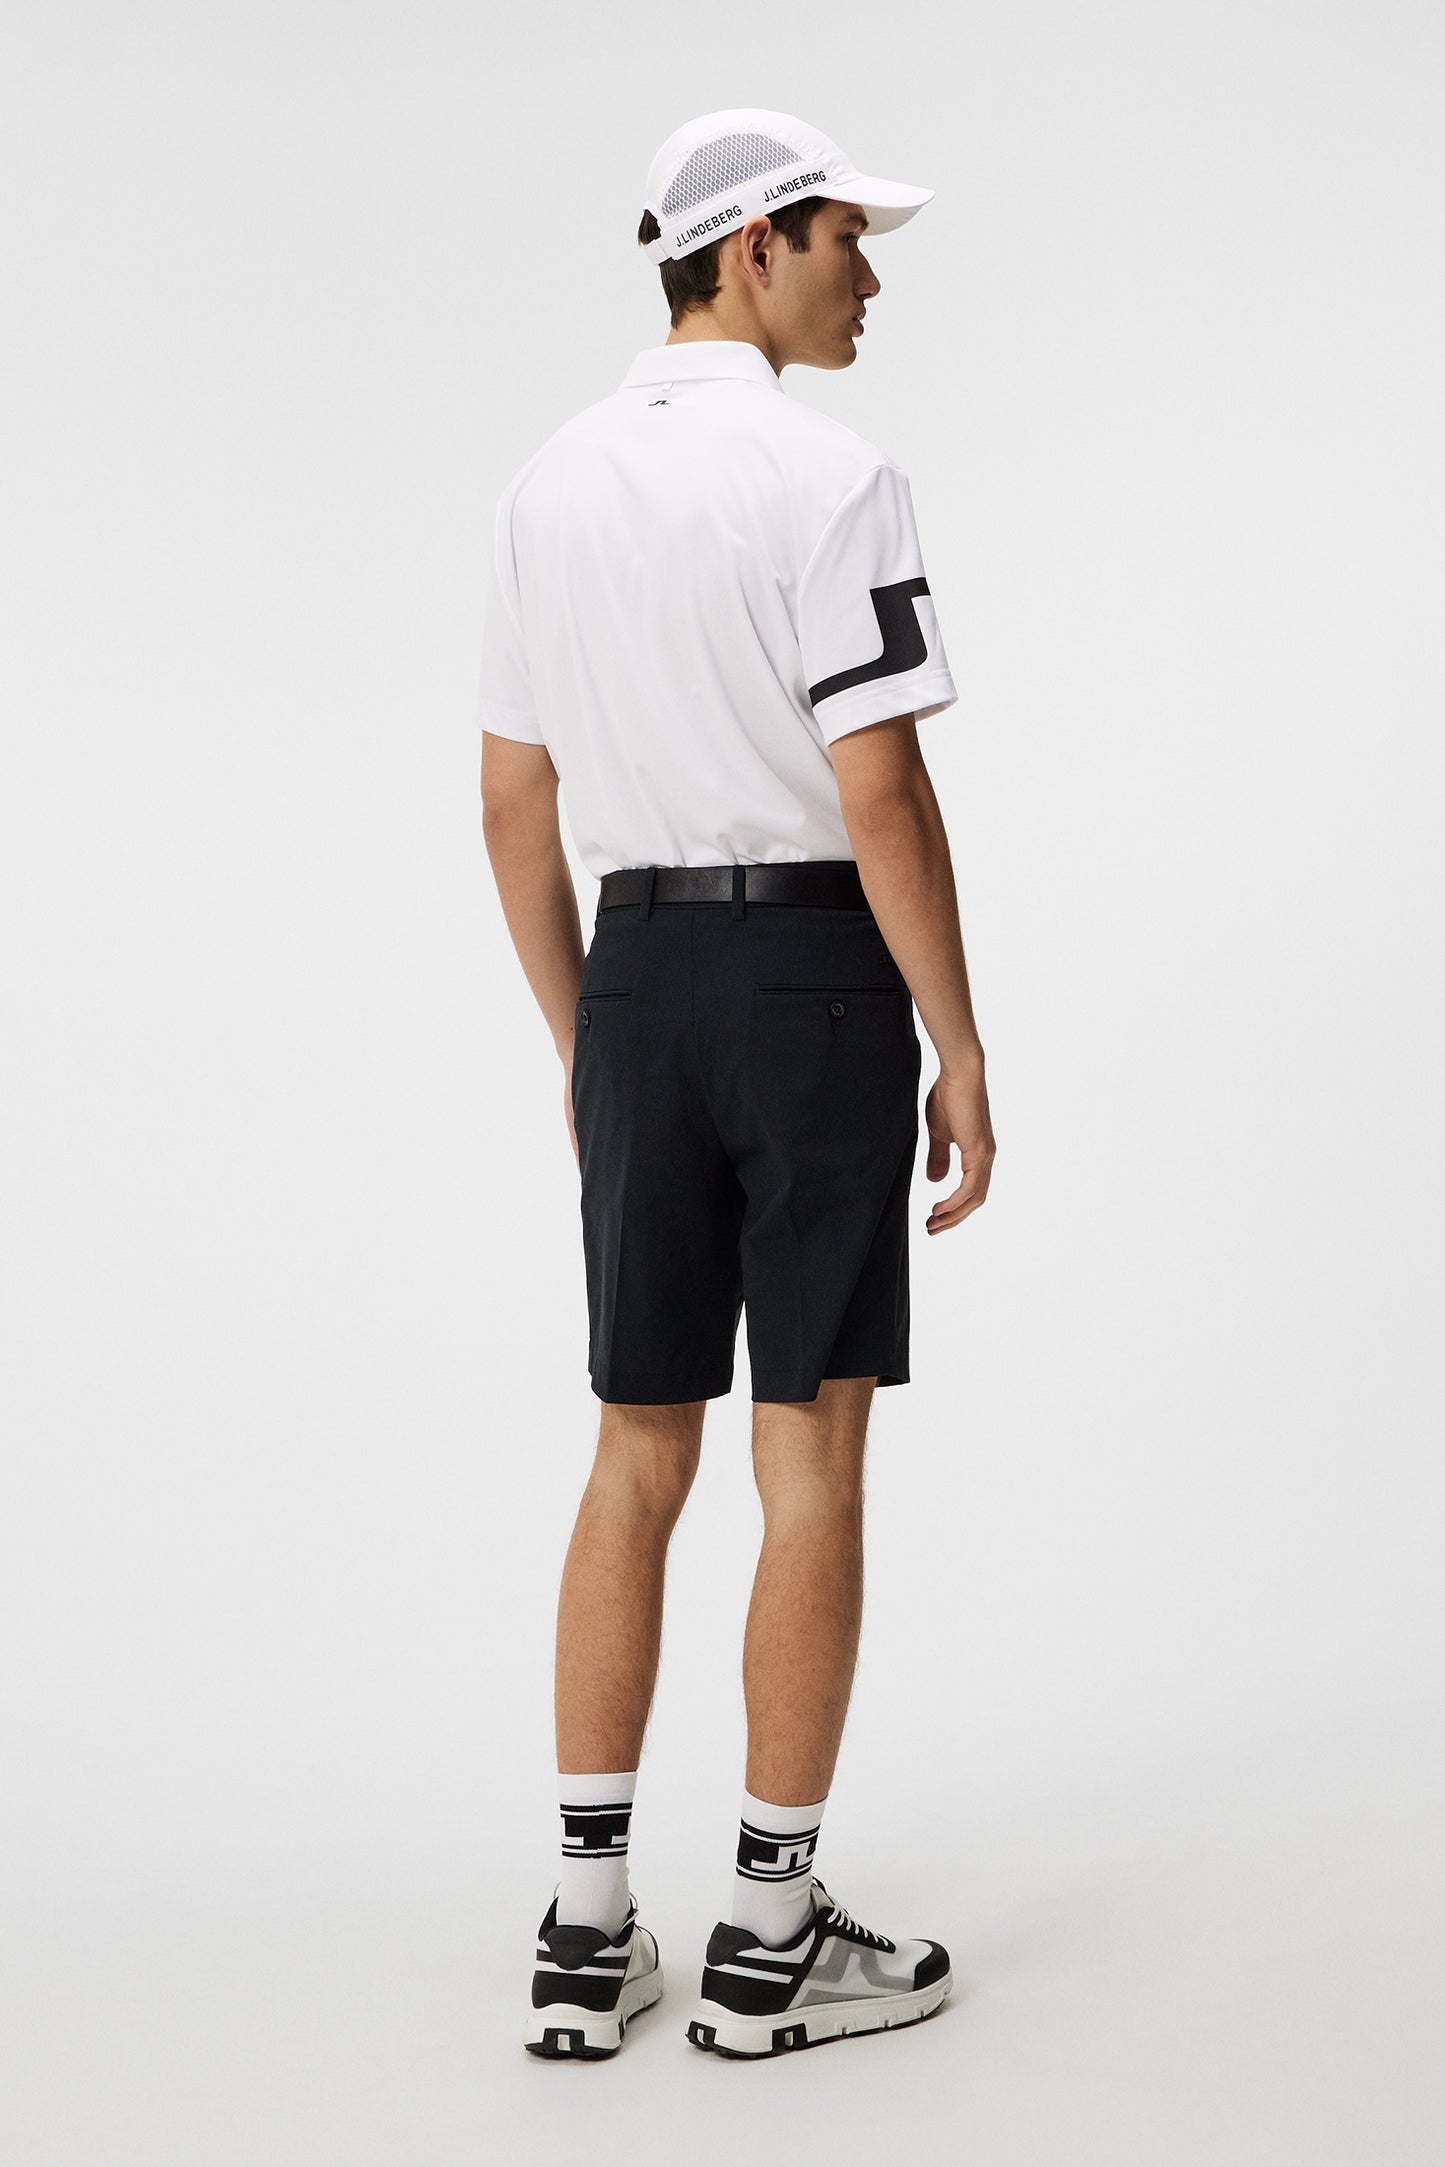 Heath Regular Fit Golf Polo / White